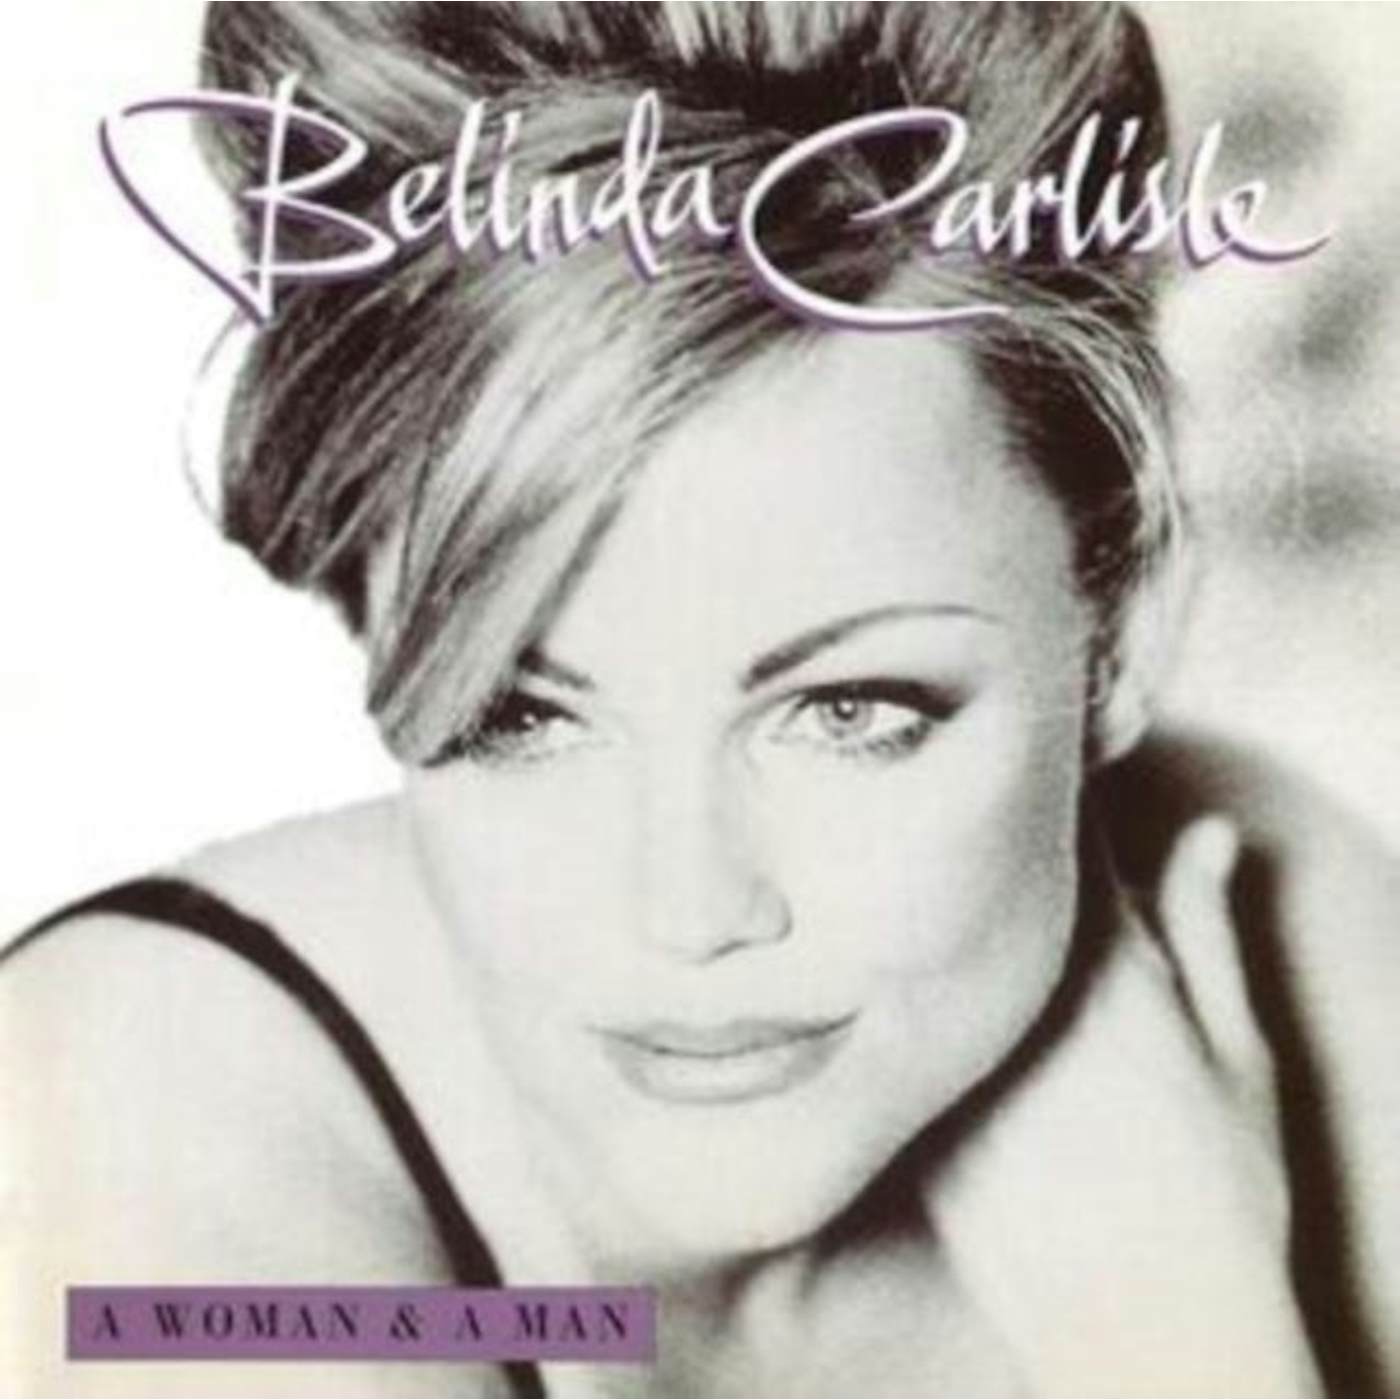 Belinda Carlisle LP Vinyl Record - A Woman And A Man - 25th Anniversary